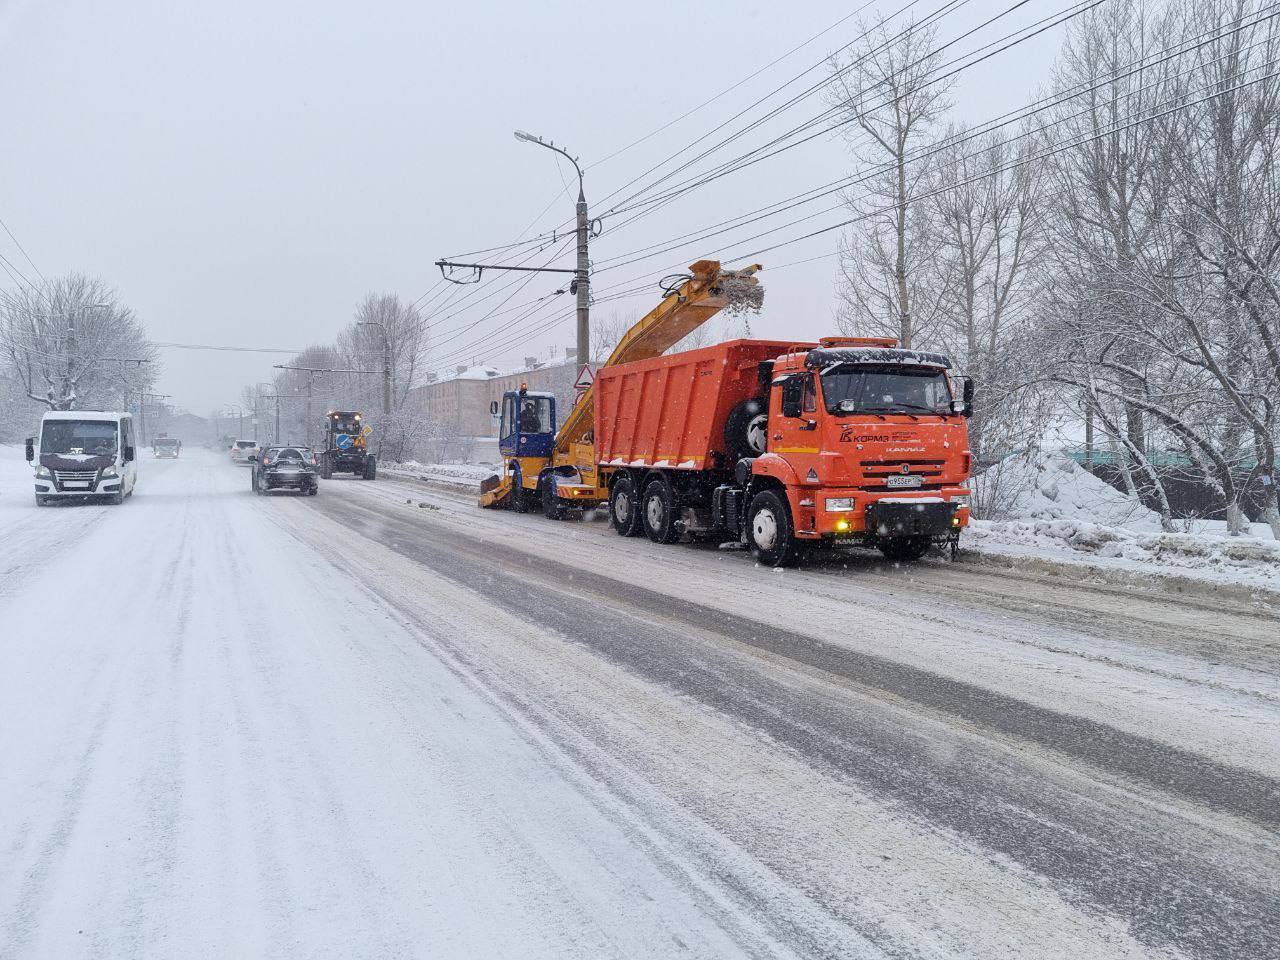 70 единиц техники устраняют последствия снегопада в Иркутске 18 февраля